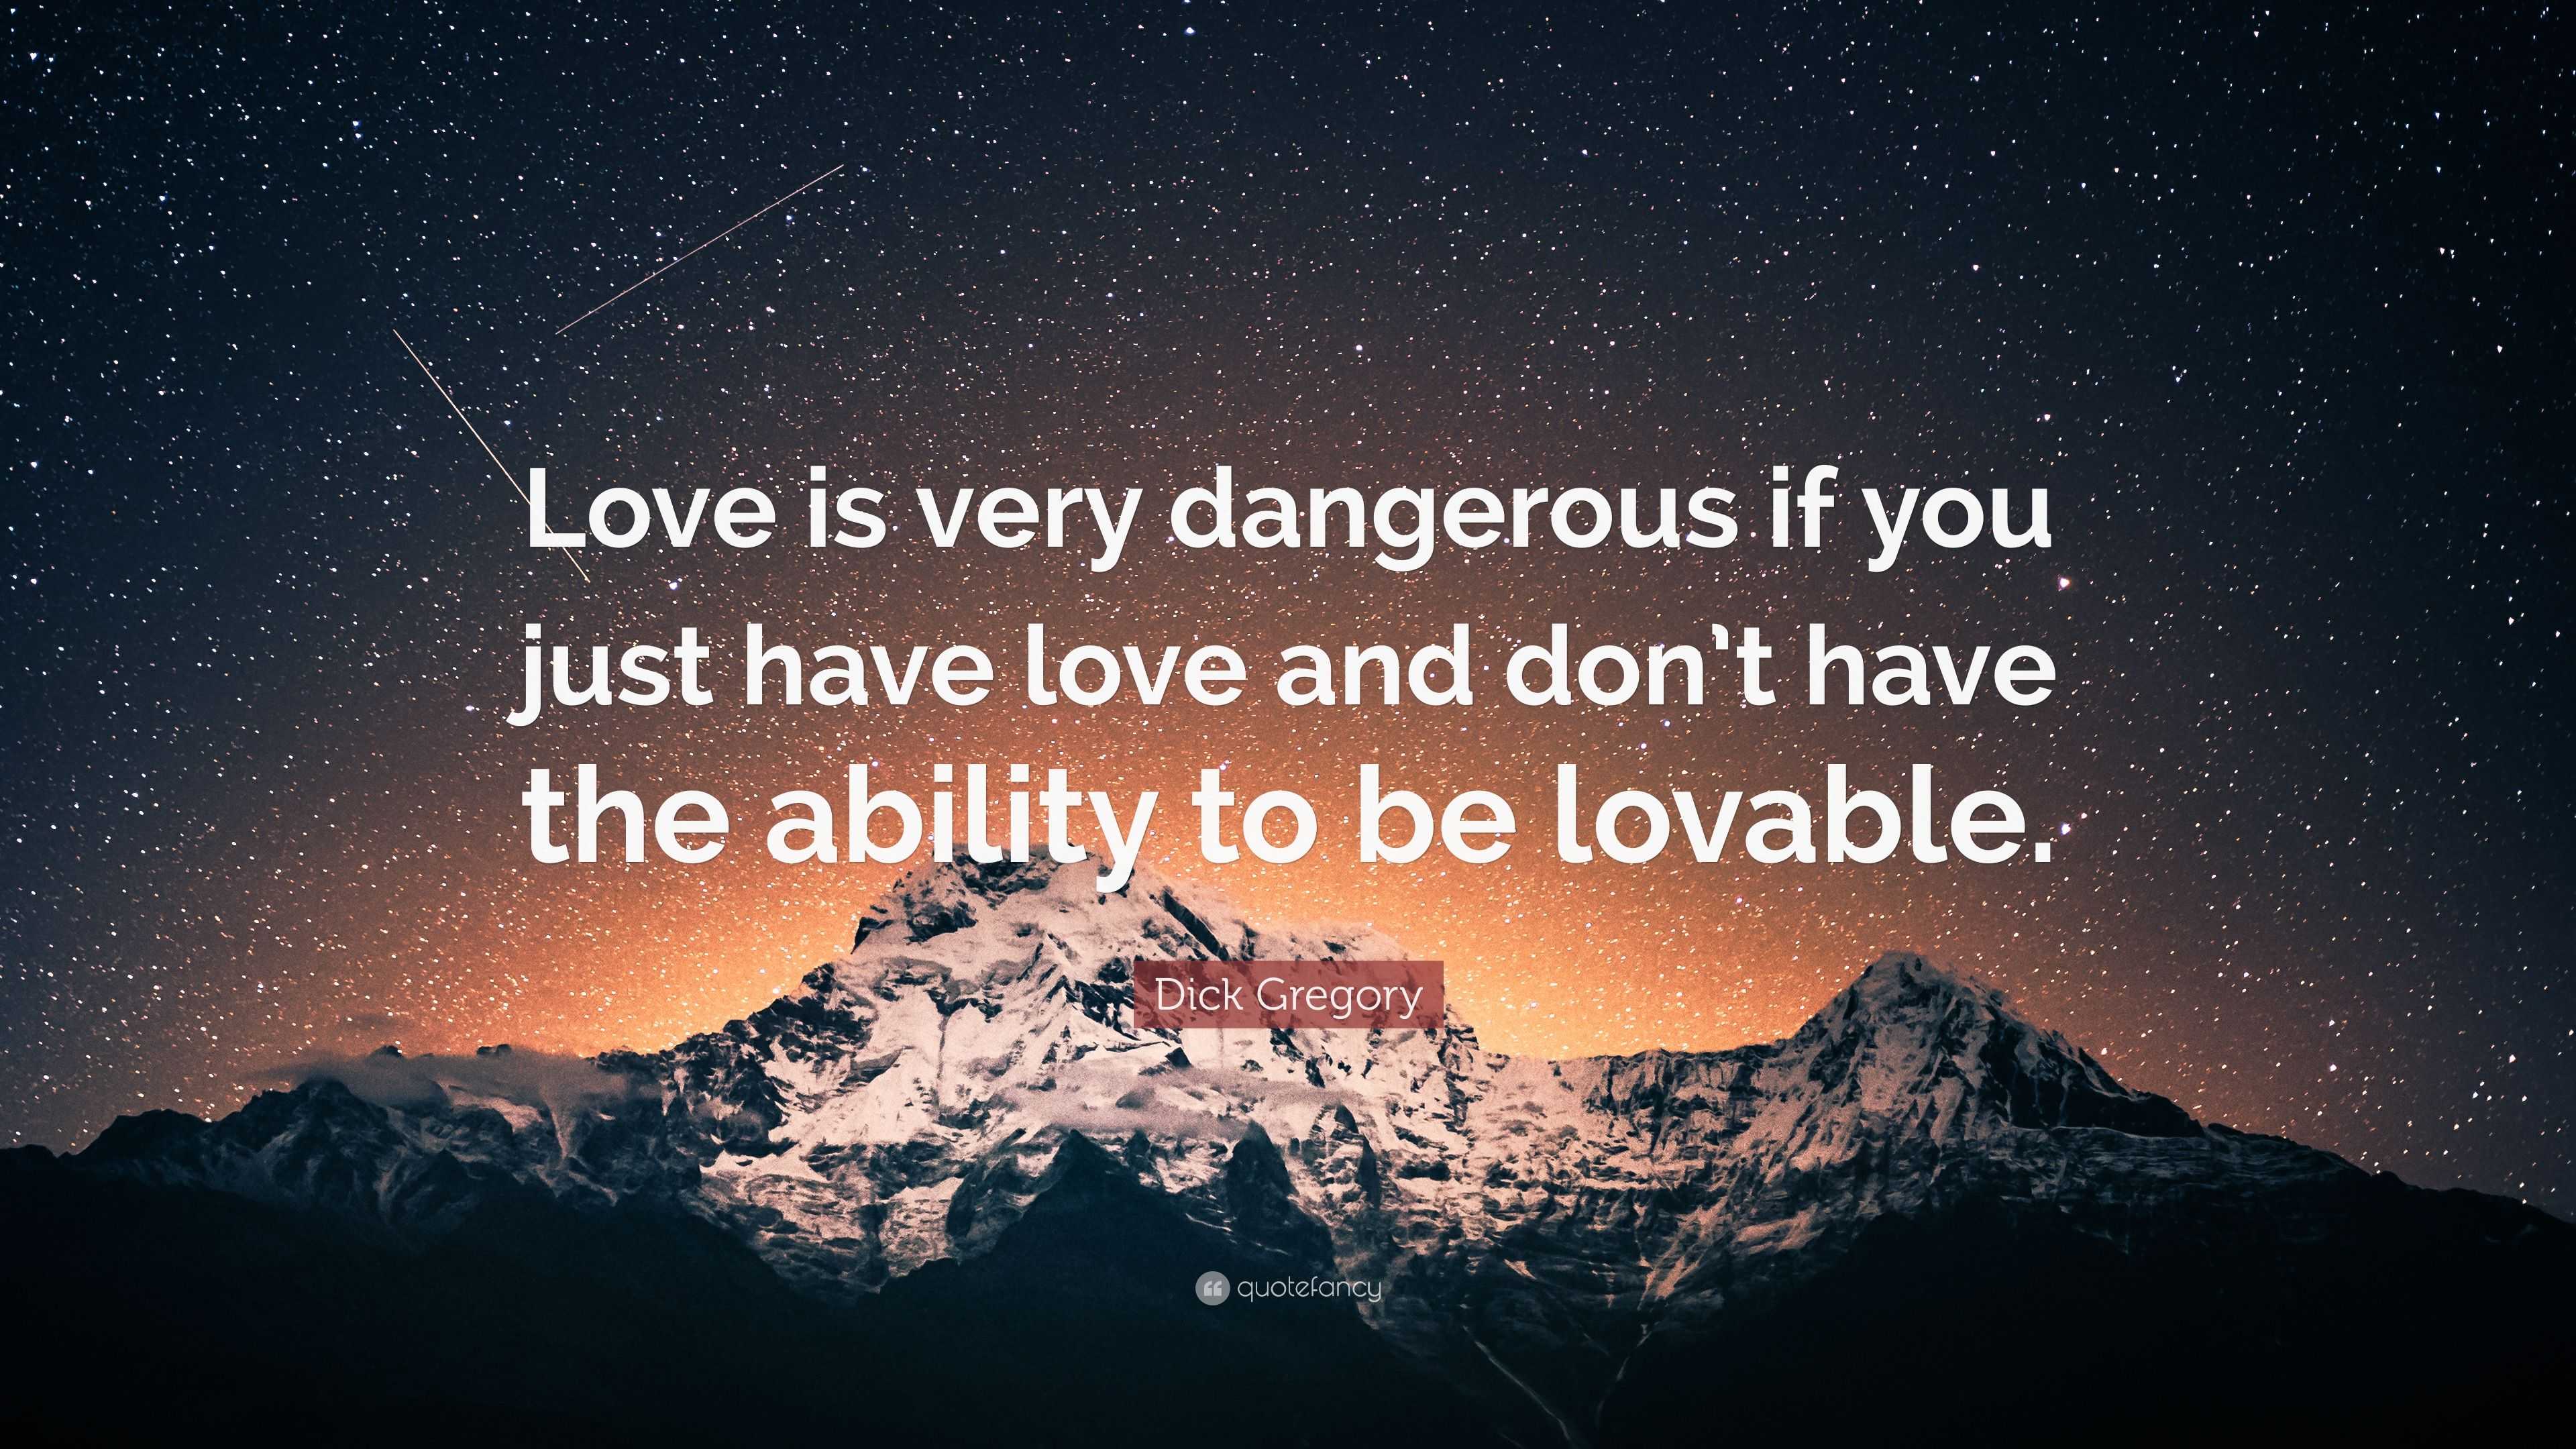 love is dangerous image